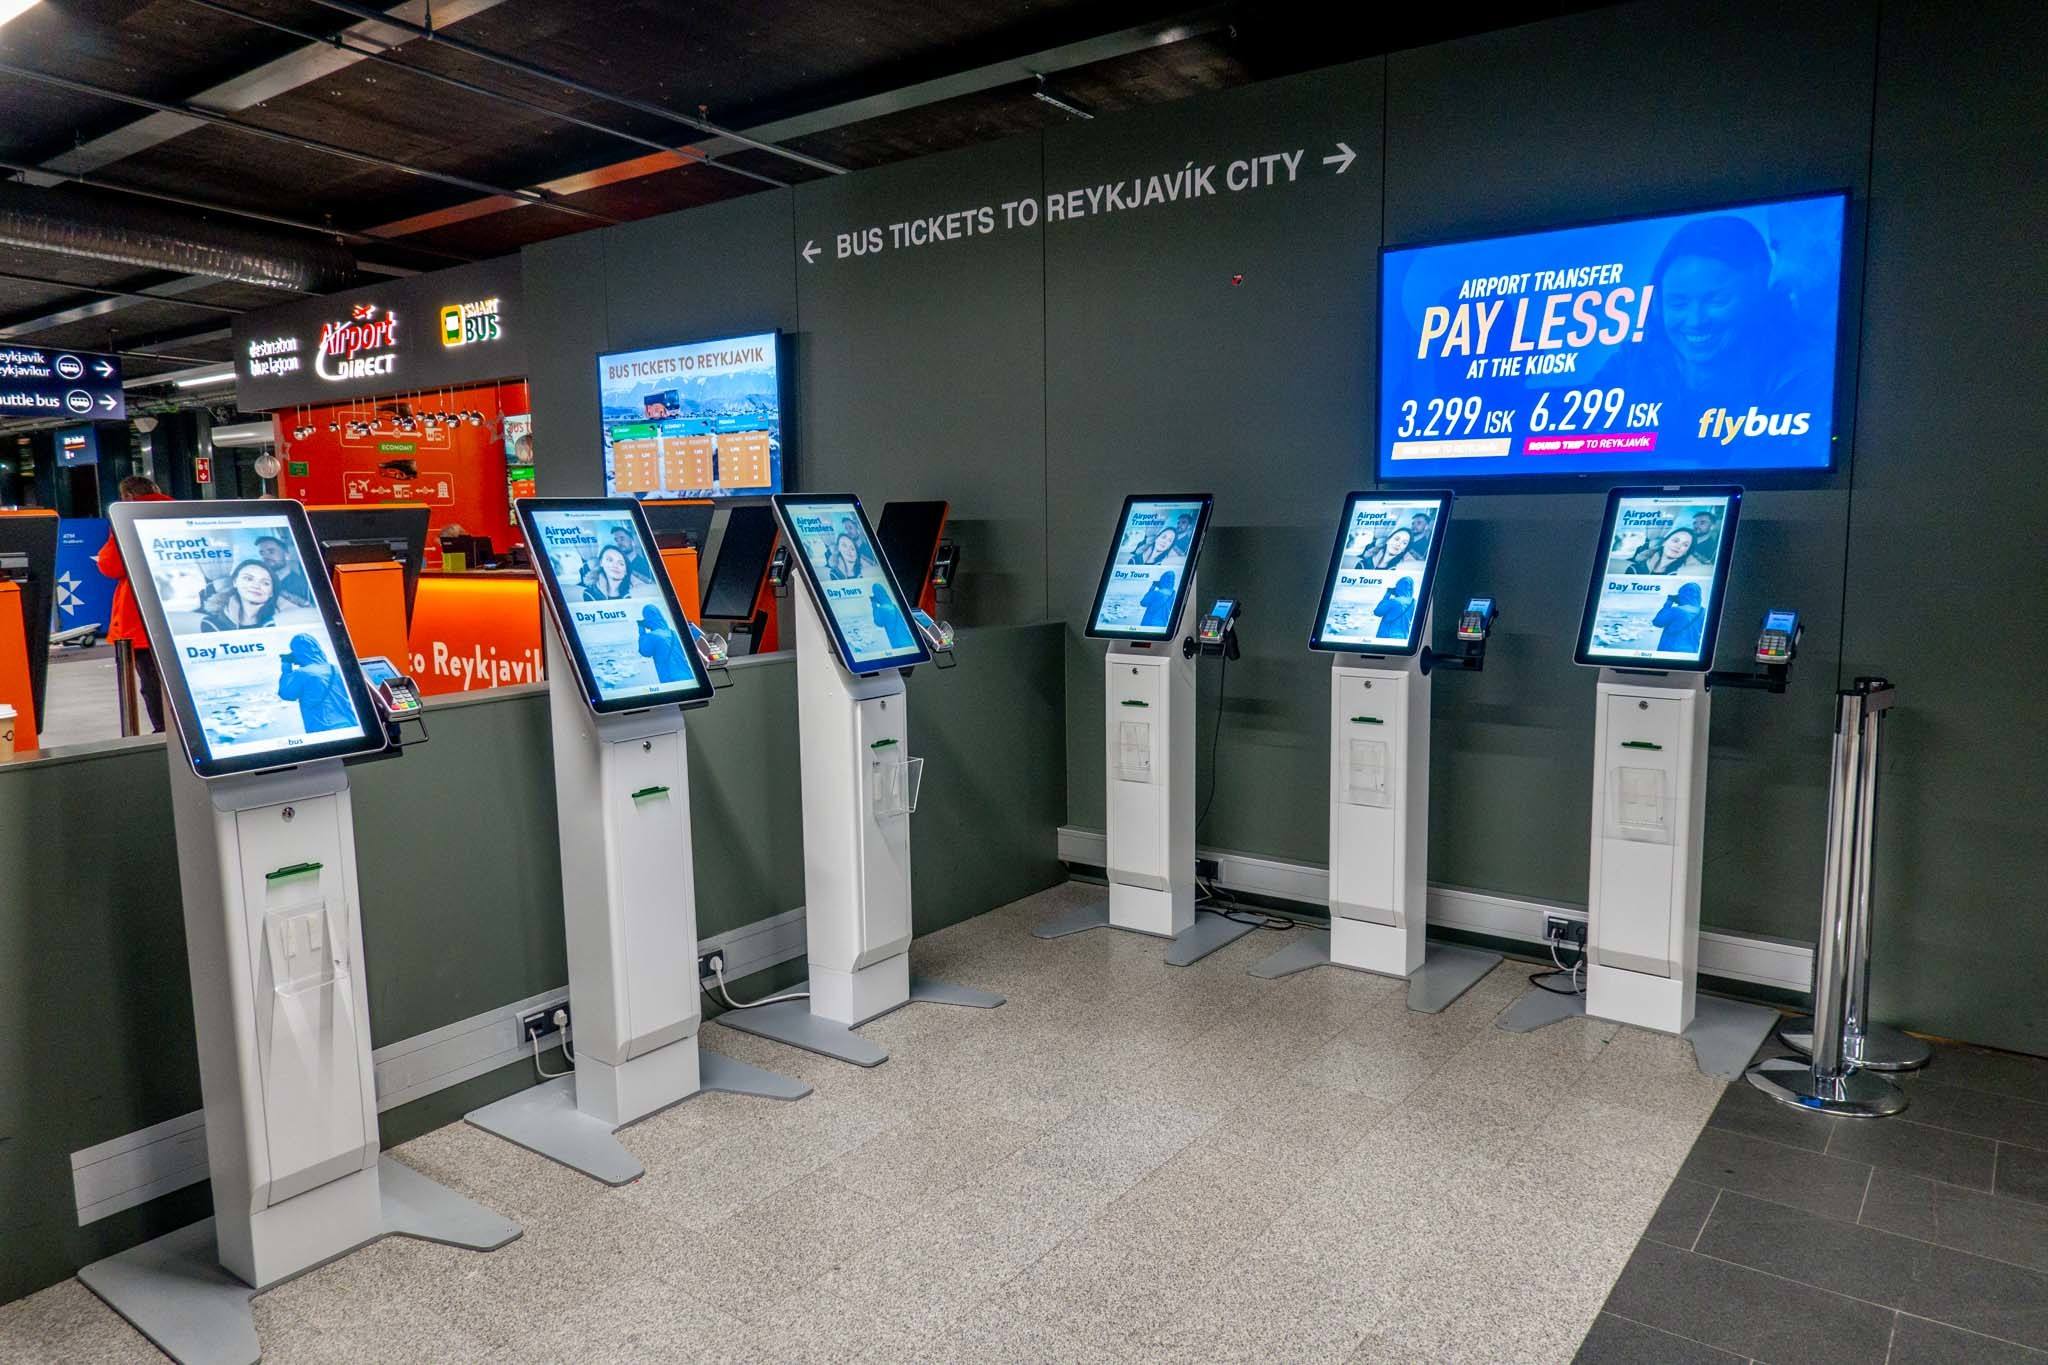 The kiosks at the Keflavik Airport in Reykjavik